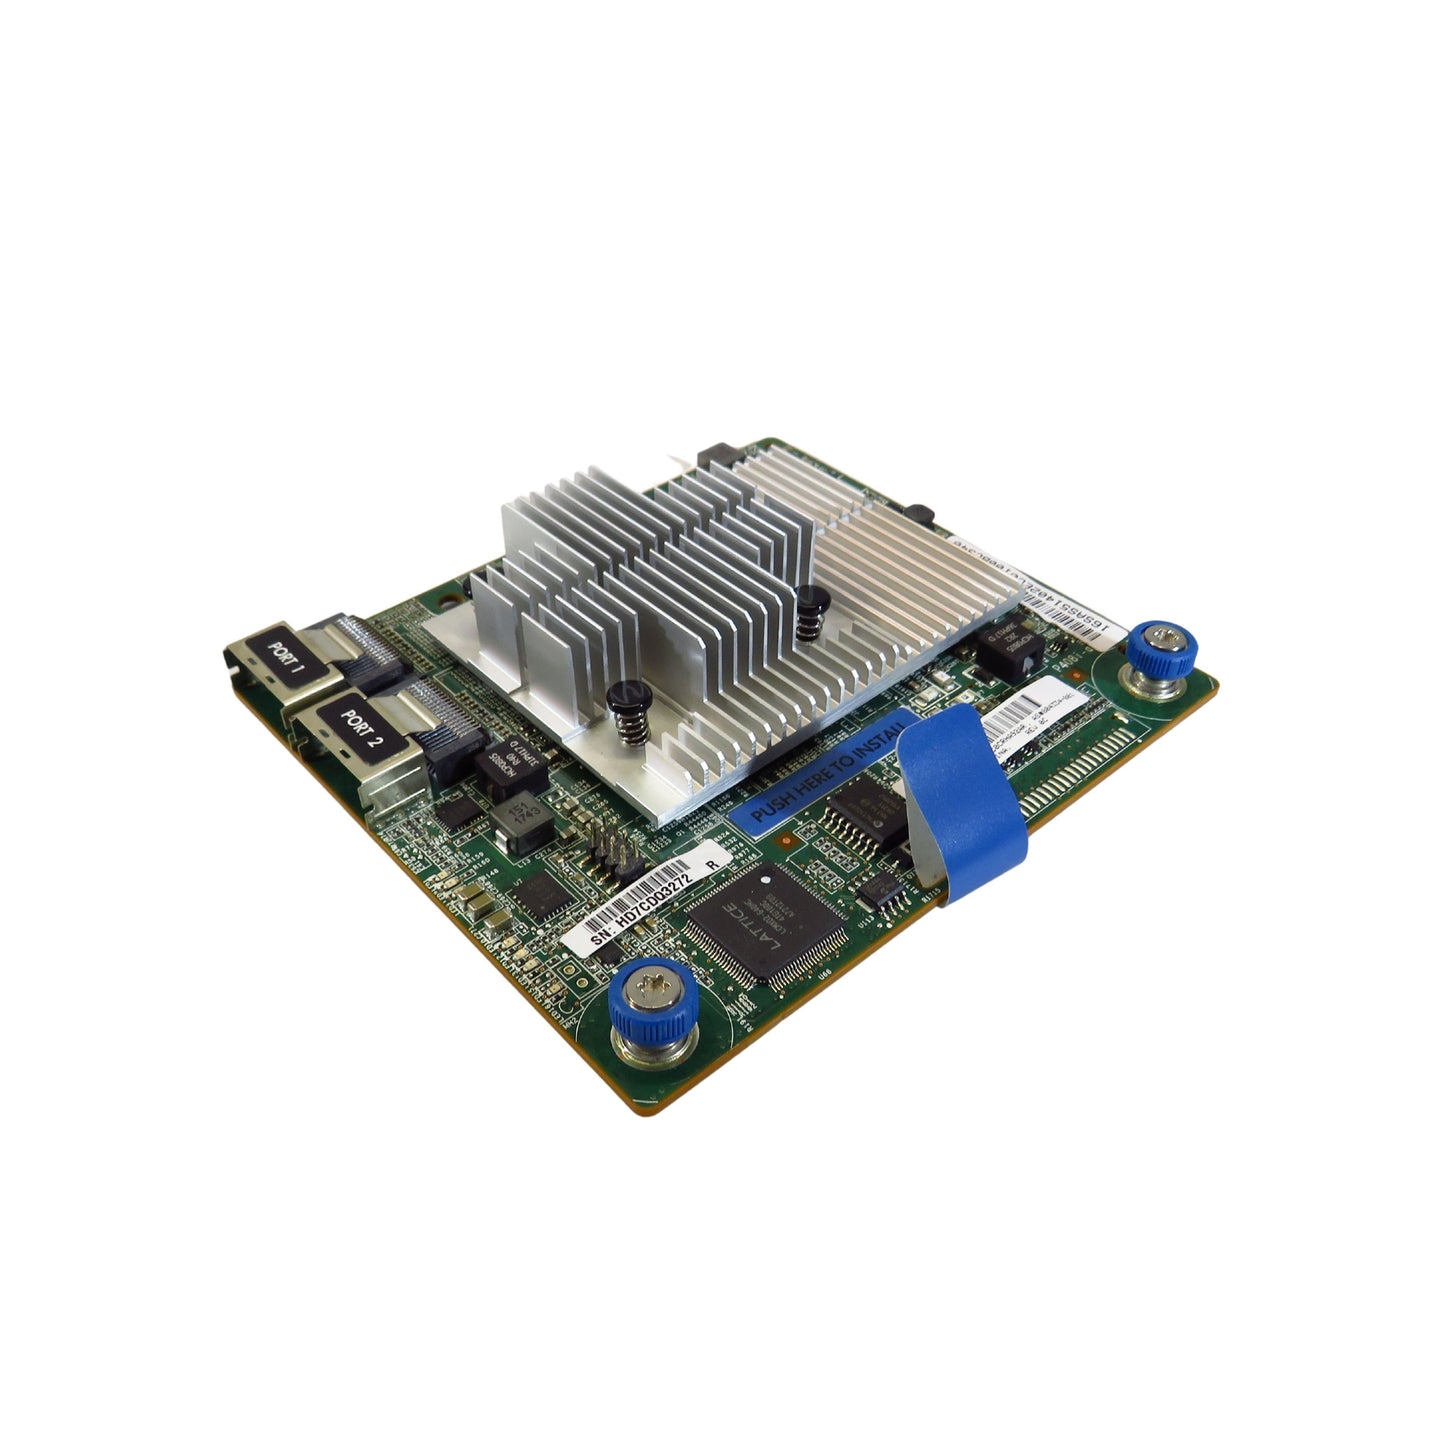 HP 836260-001 P408I-a SR Smart Array Gen10 Modular Controller Card (Refurbished)